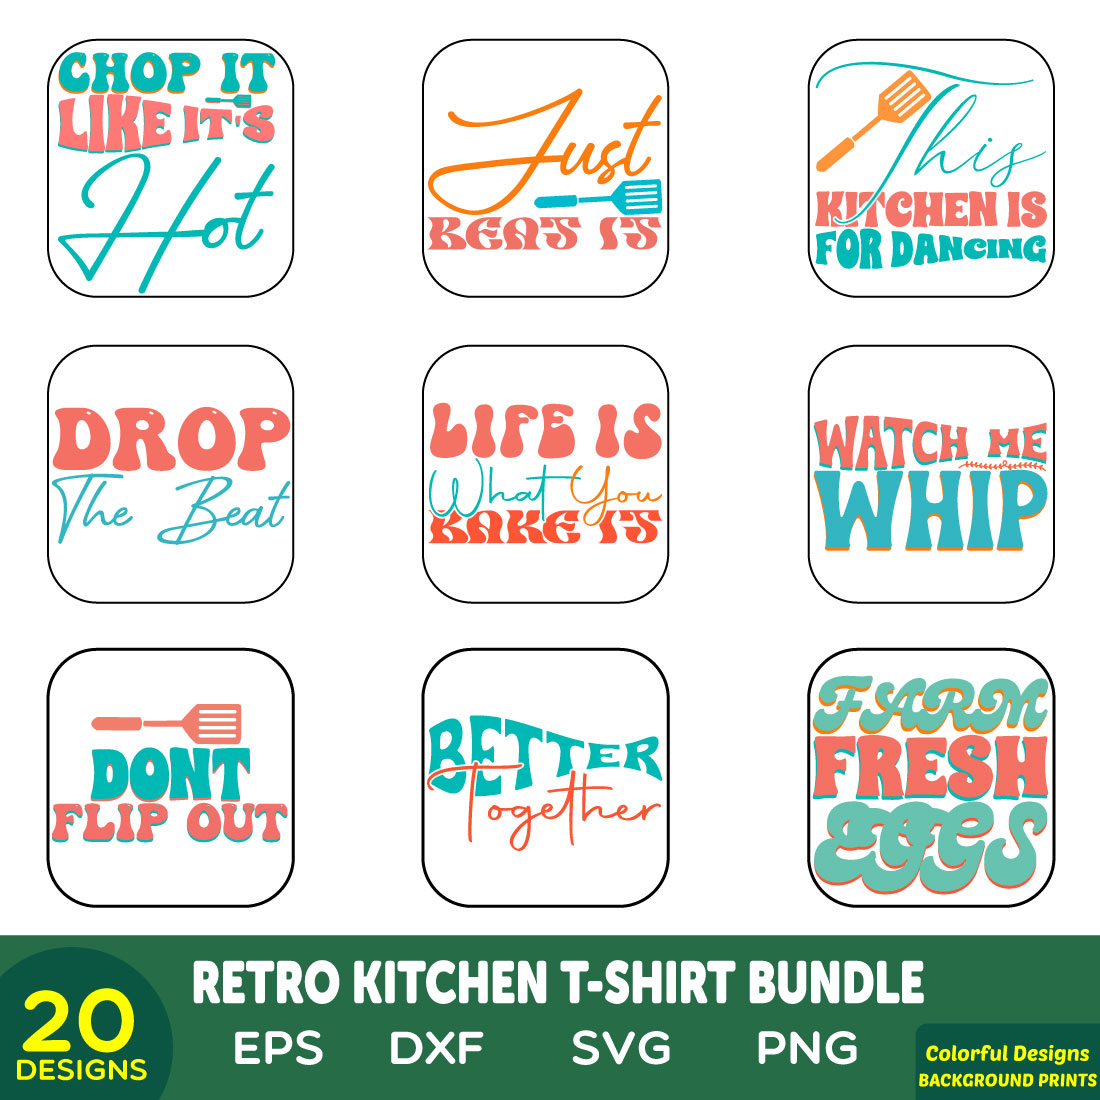 Retro Kitchen T-Shirt Bundle preview image.